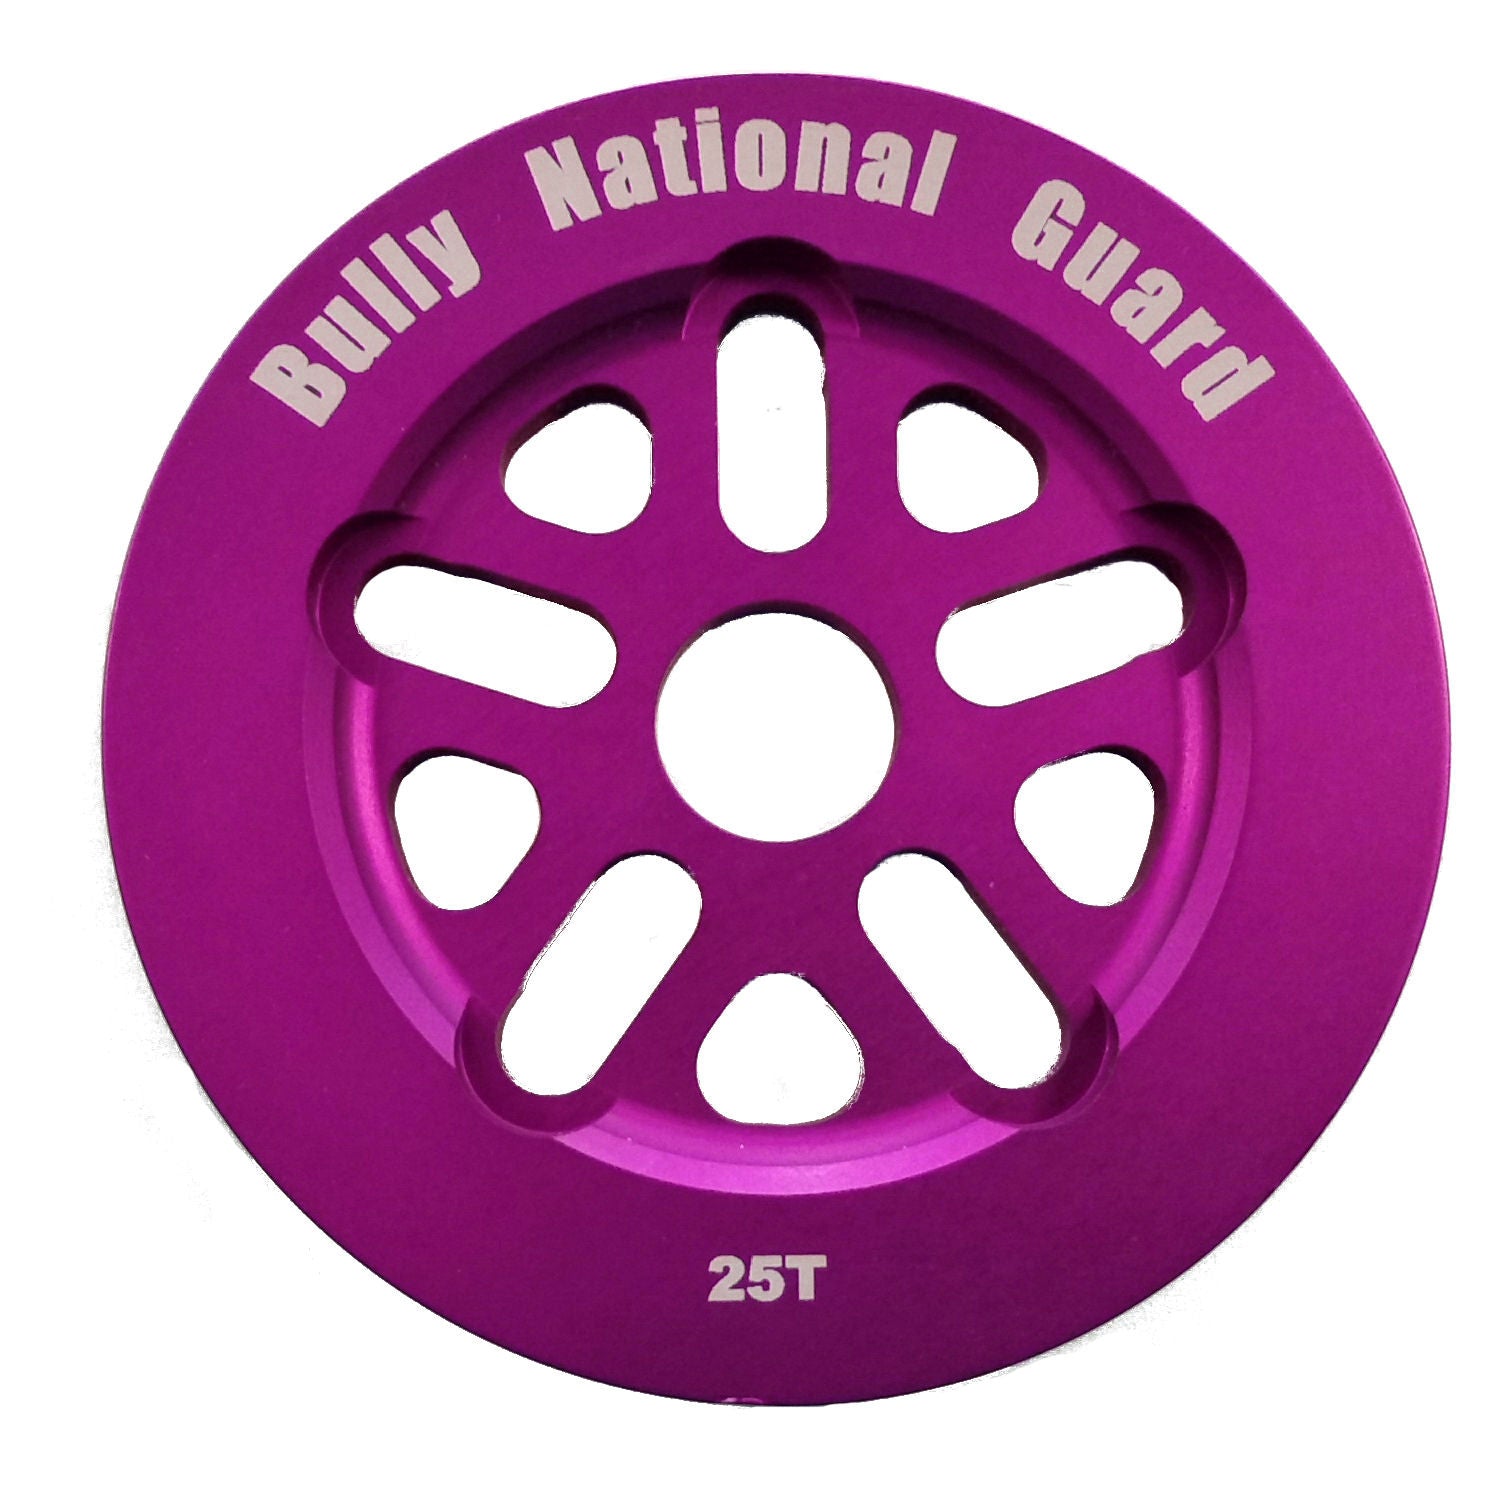 Bully National Guard 25t Sprocket Chainwheel - Purple - USA Made